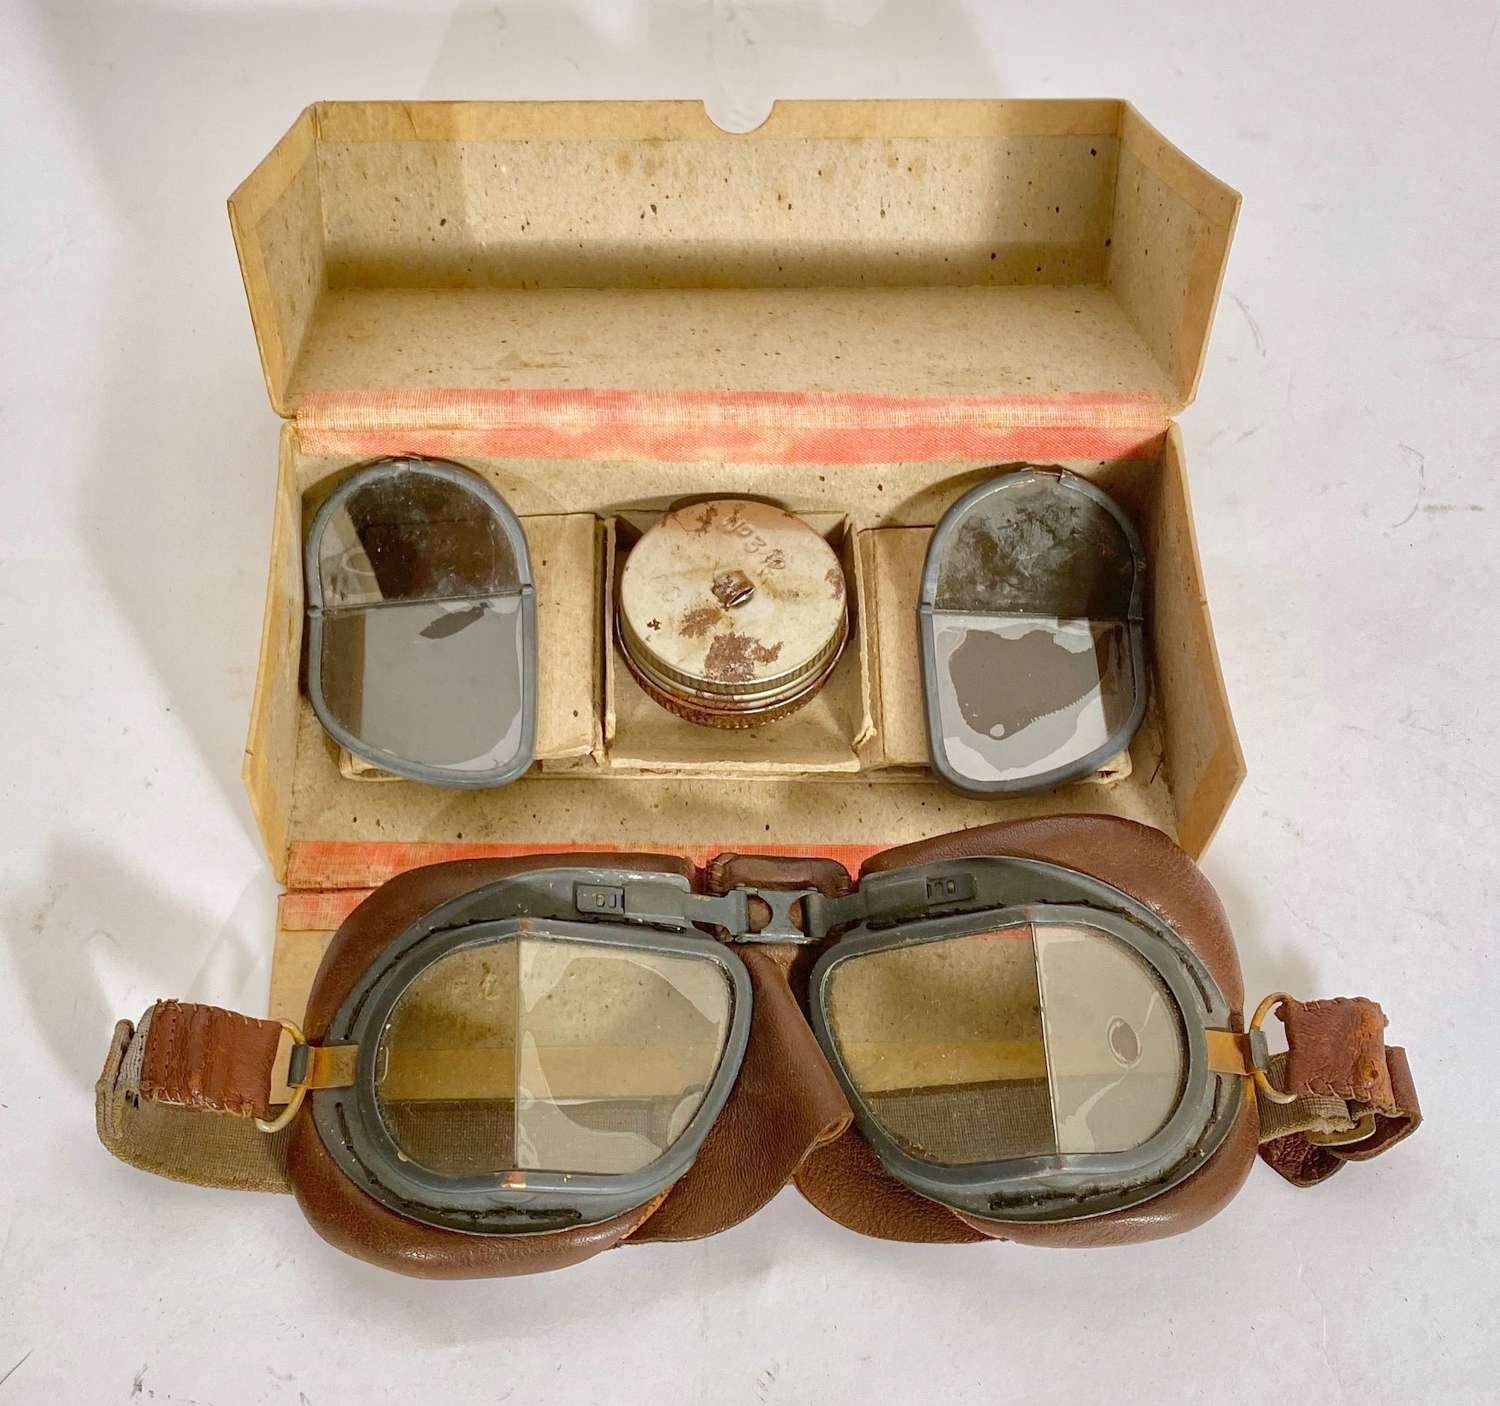 WW2 RAF MKVIII Aircrew Flying Goggles & Box